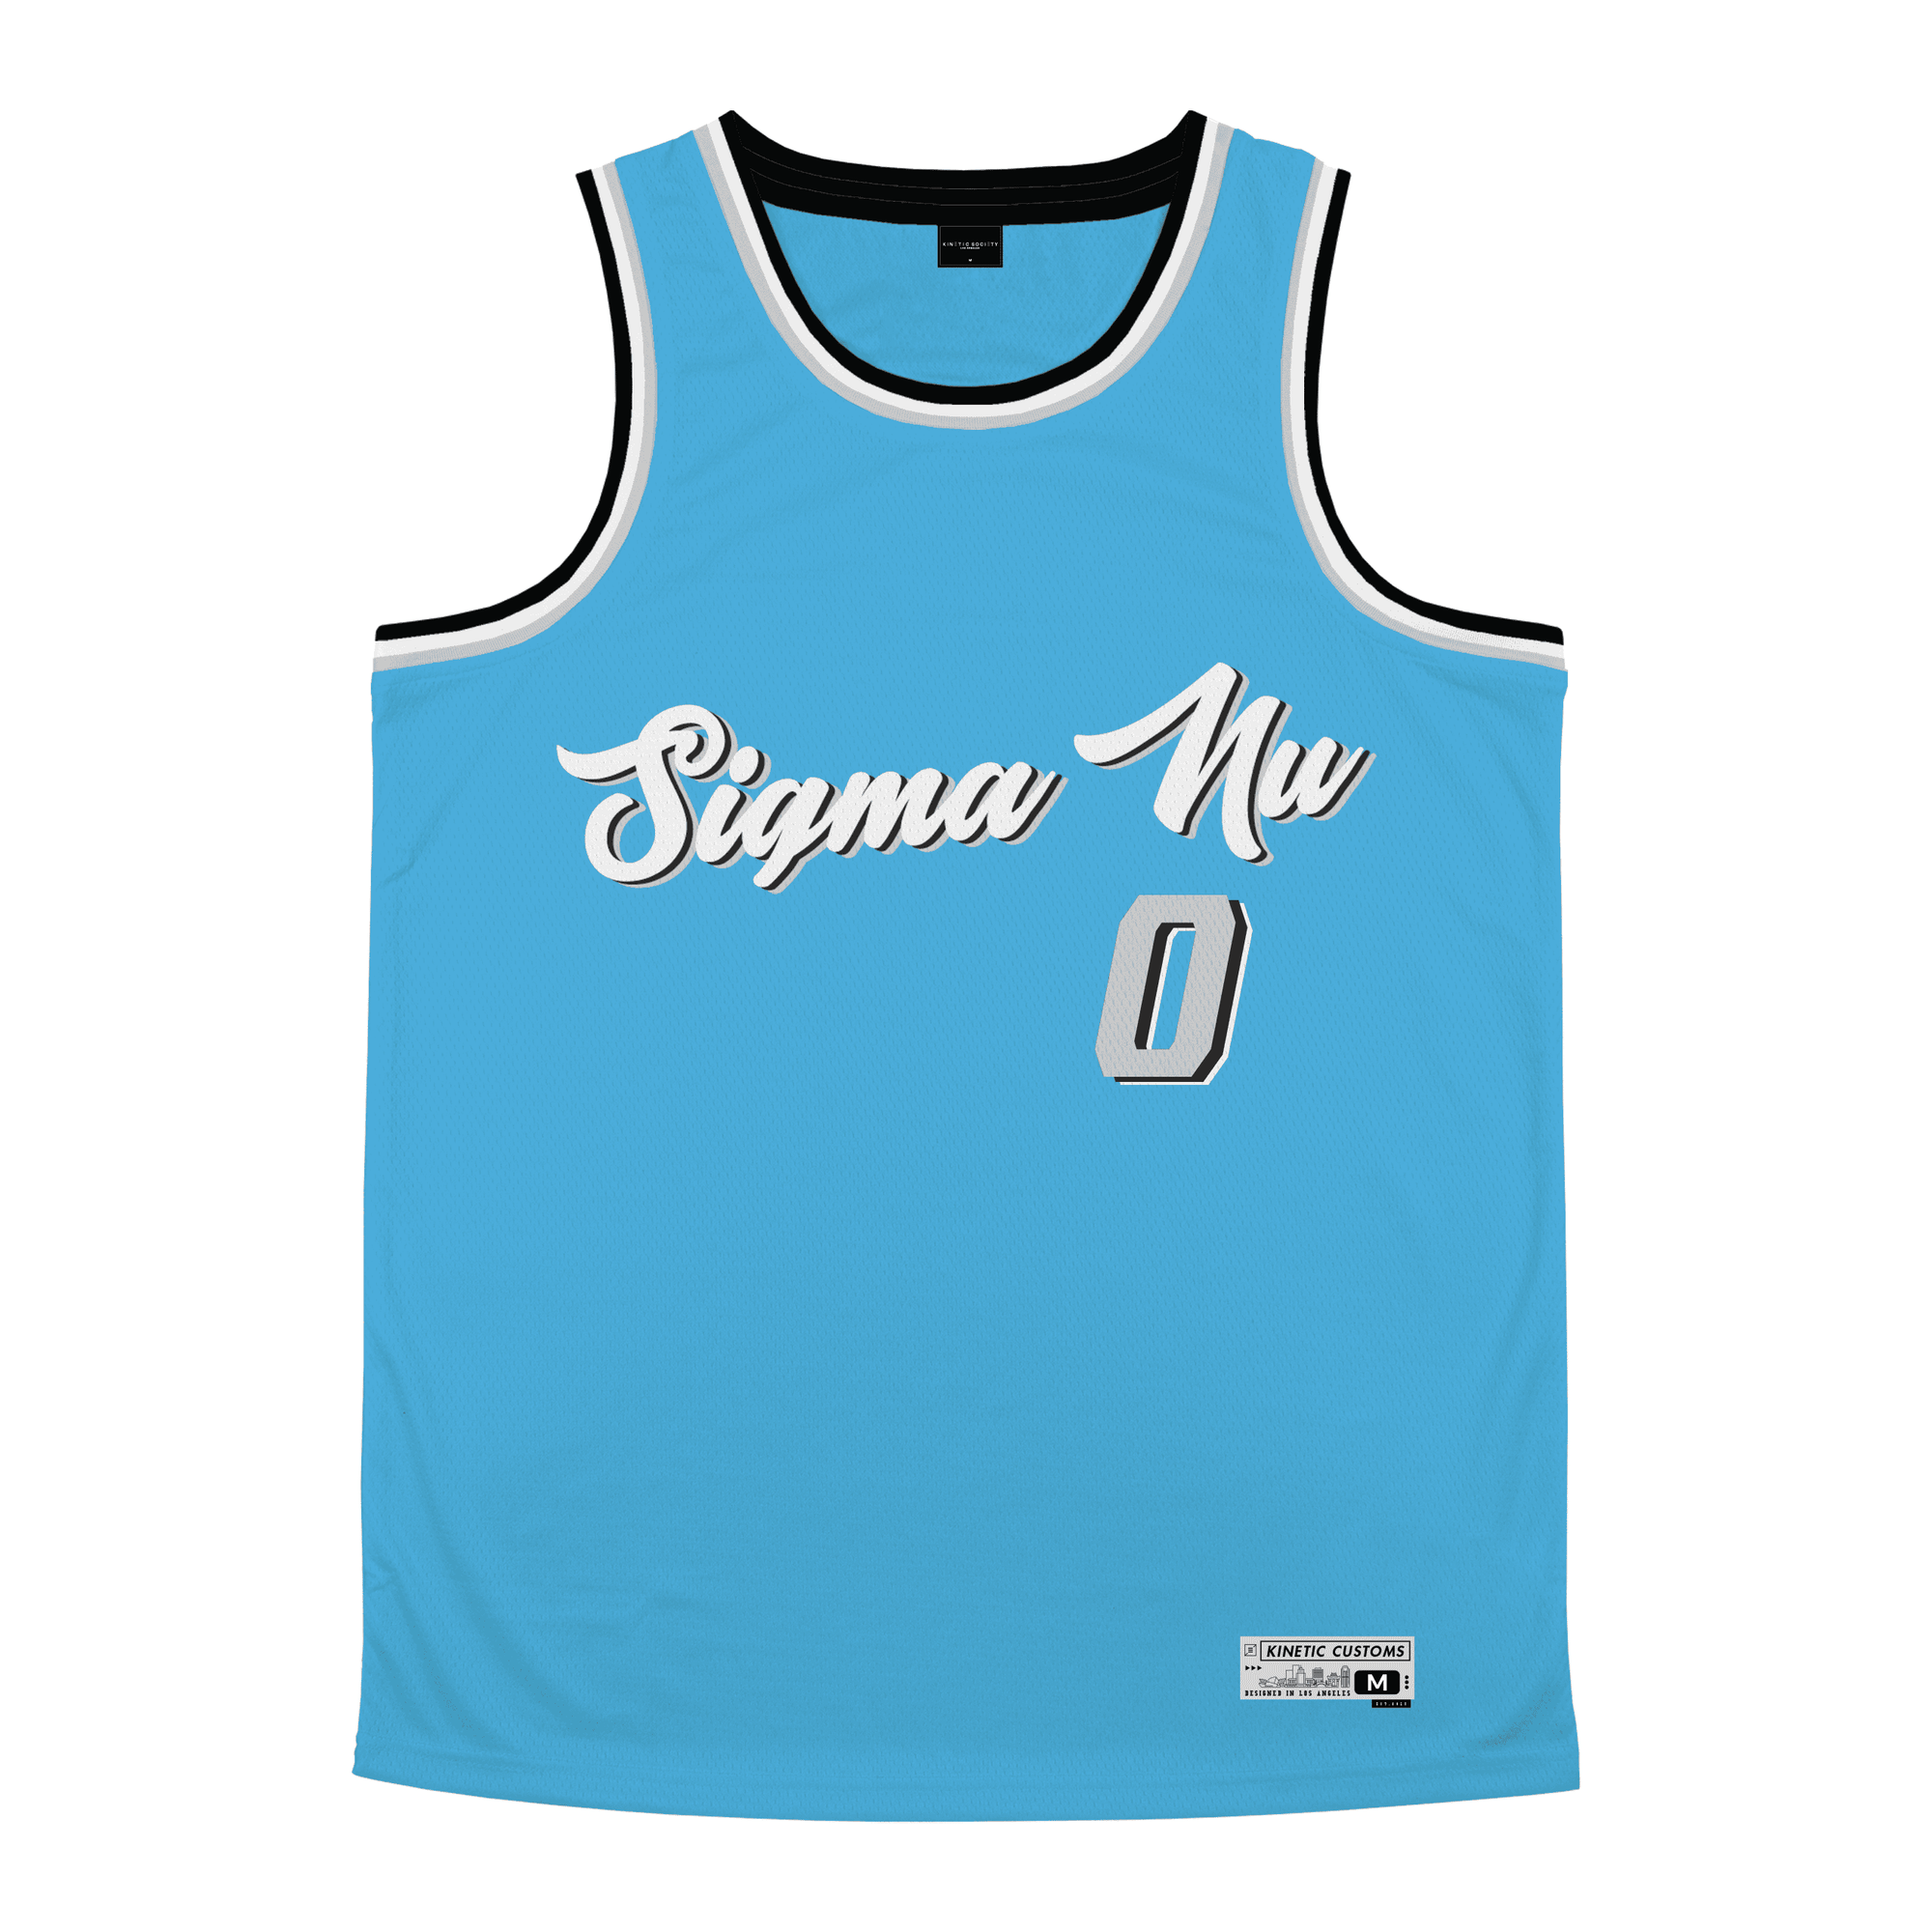 Sigma Nu - Pacific Mist Basketball Jersey